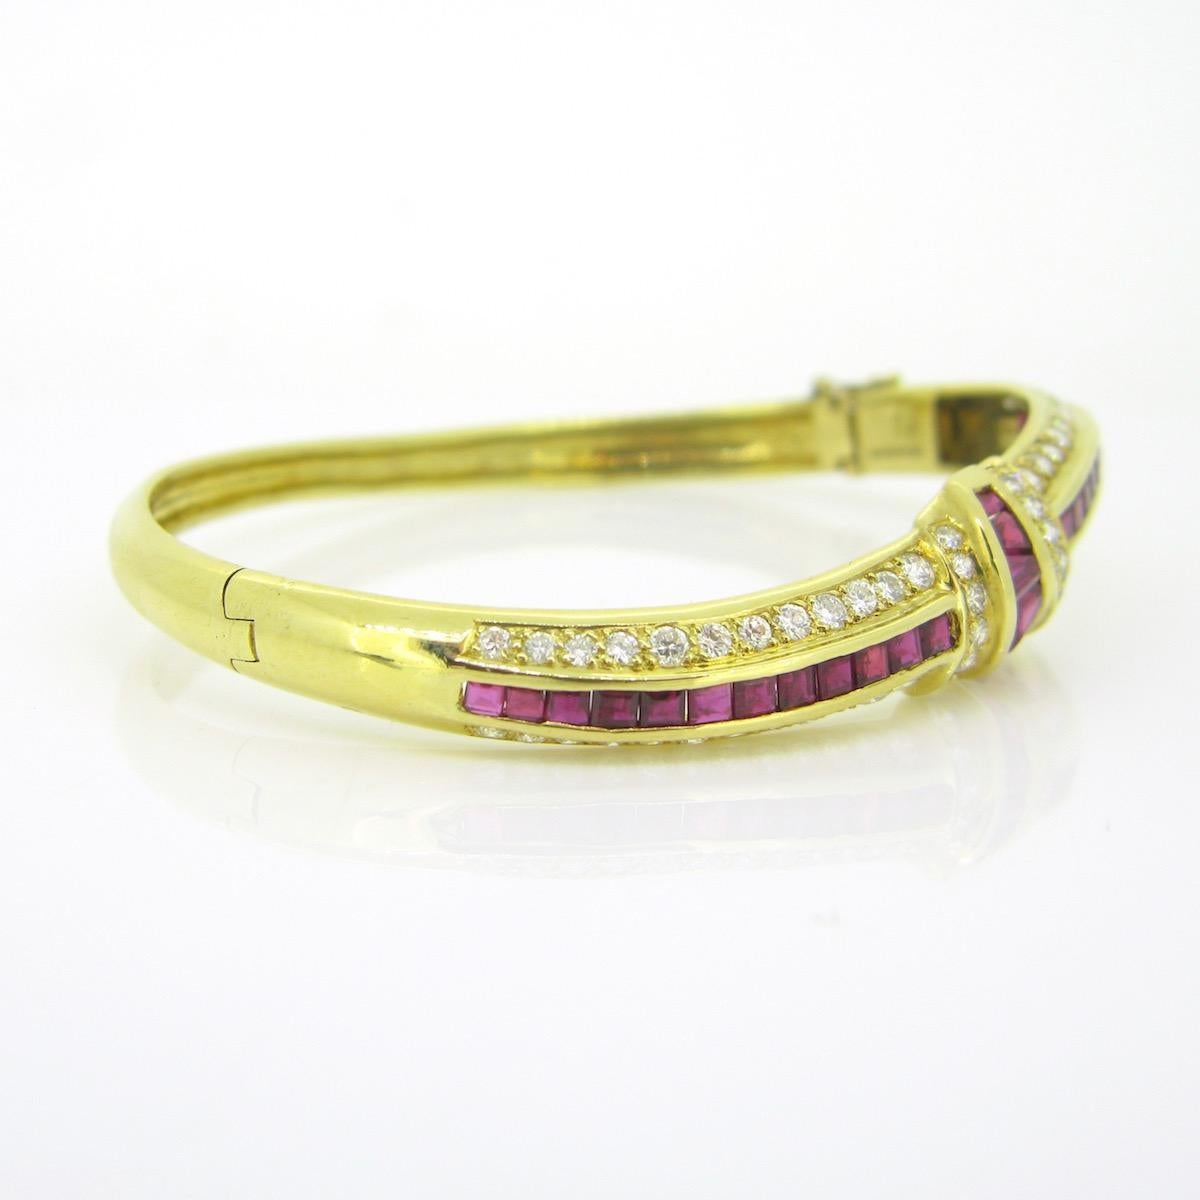 Brilliant Cut Calibrated Rubies and Diamonds Bangle Bracelet, 18kt Yellow Gold